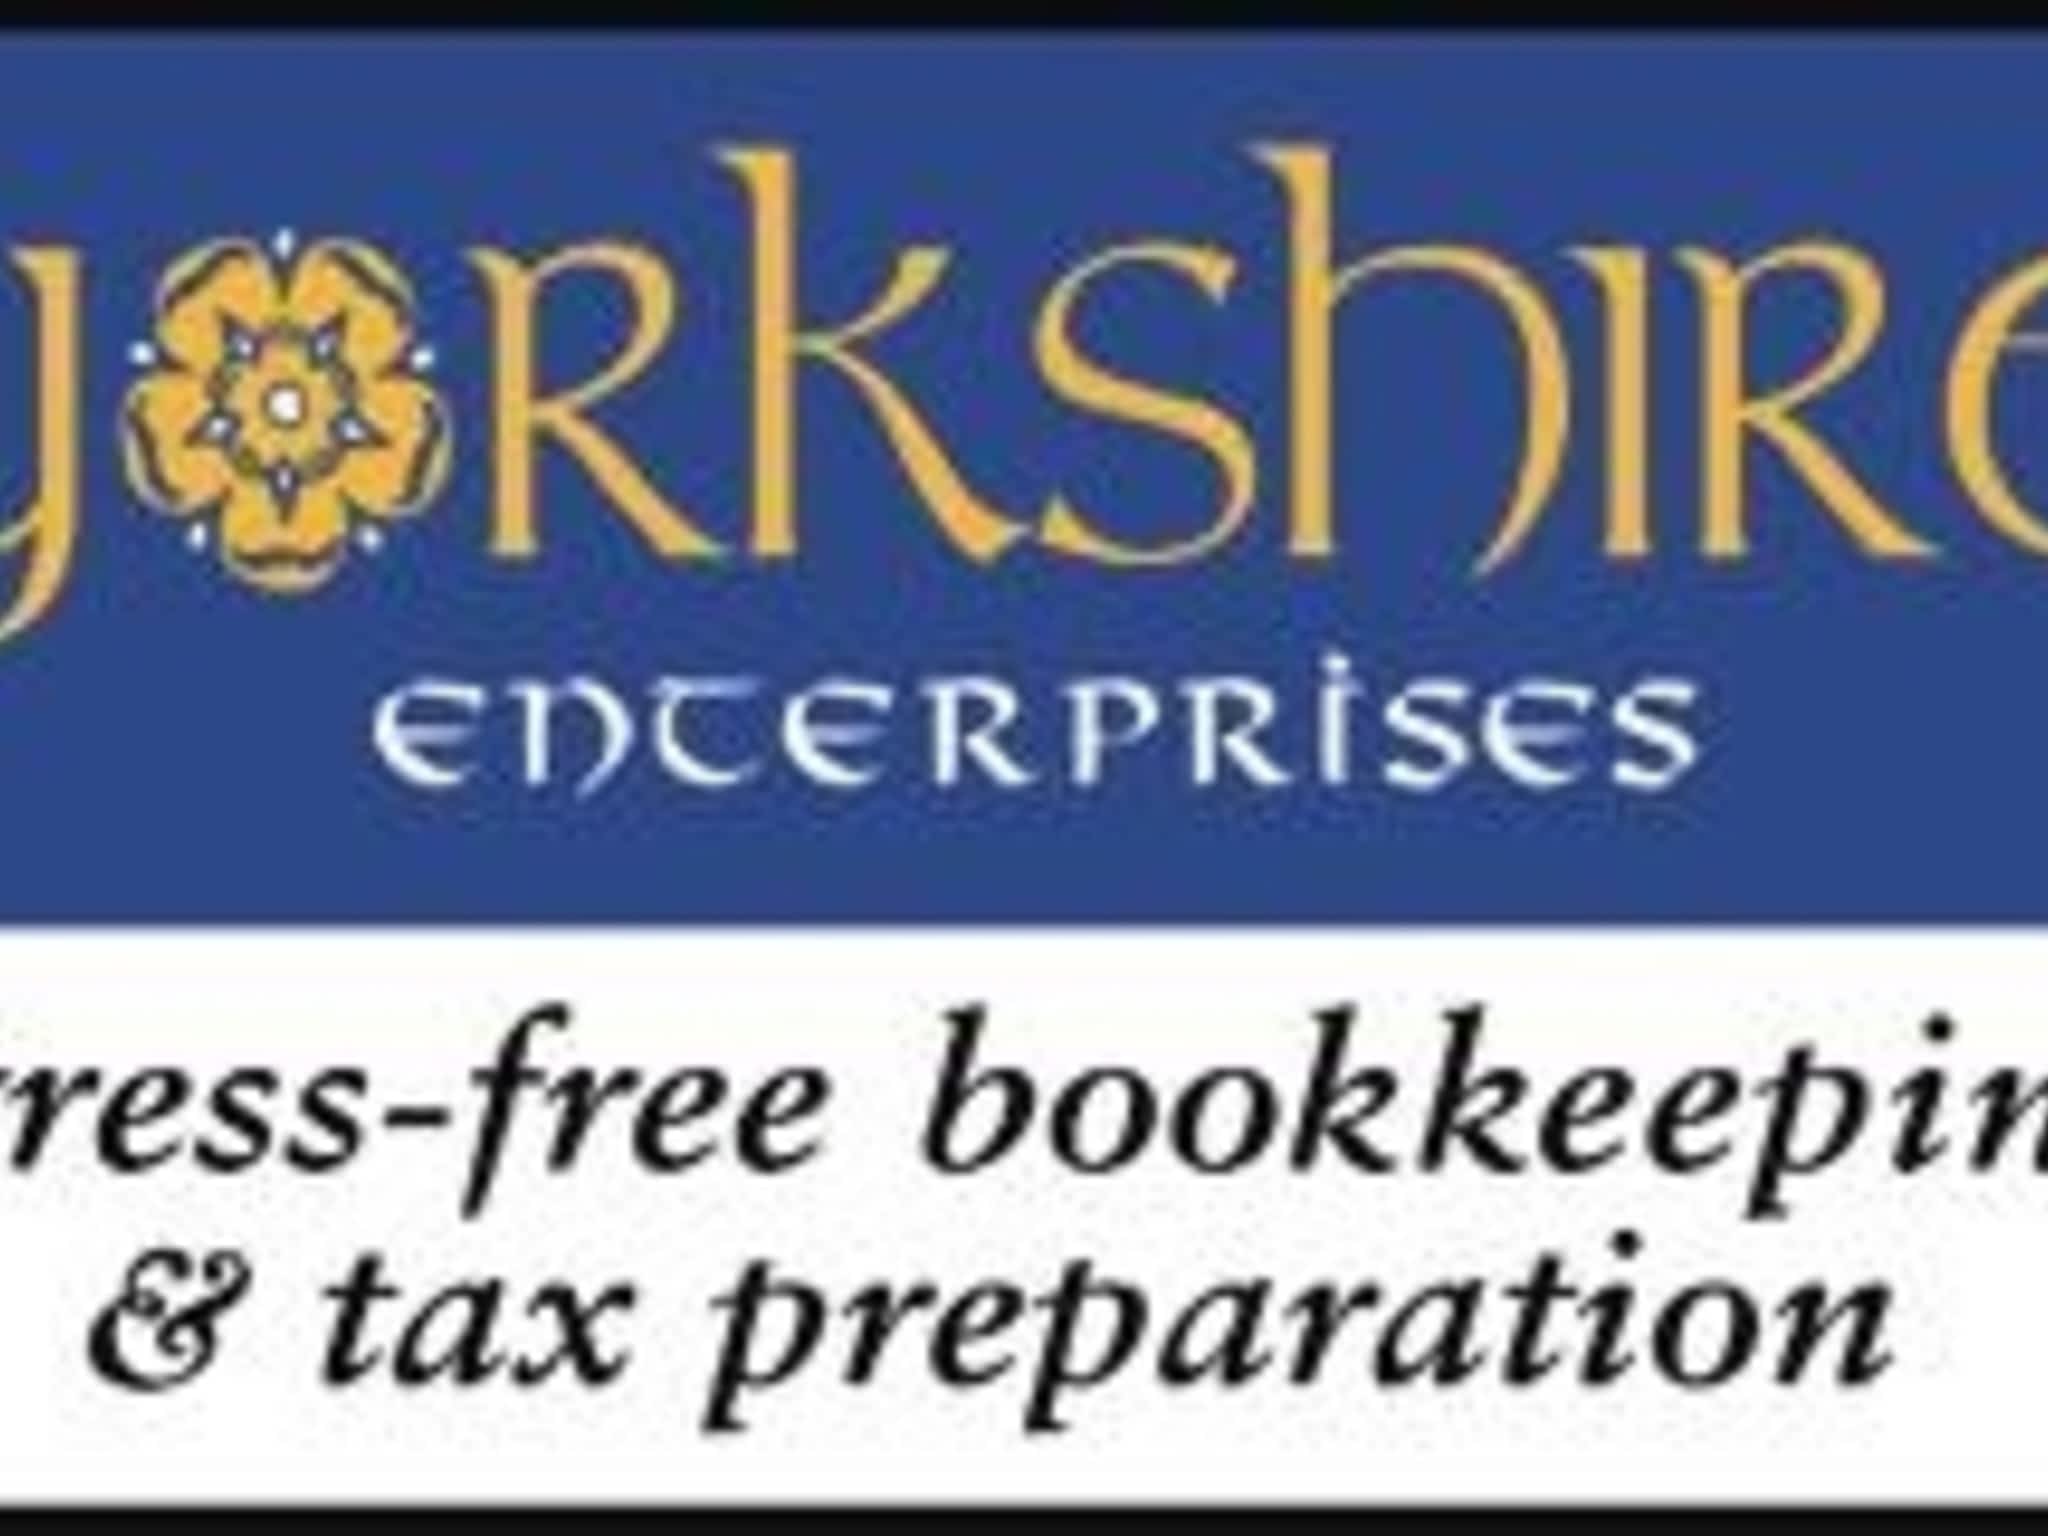 photo Yorkshire Enterprises Inc